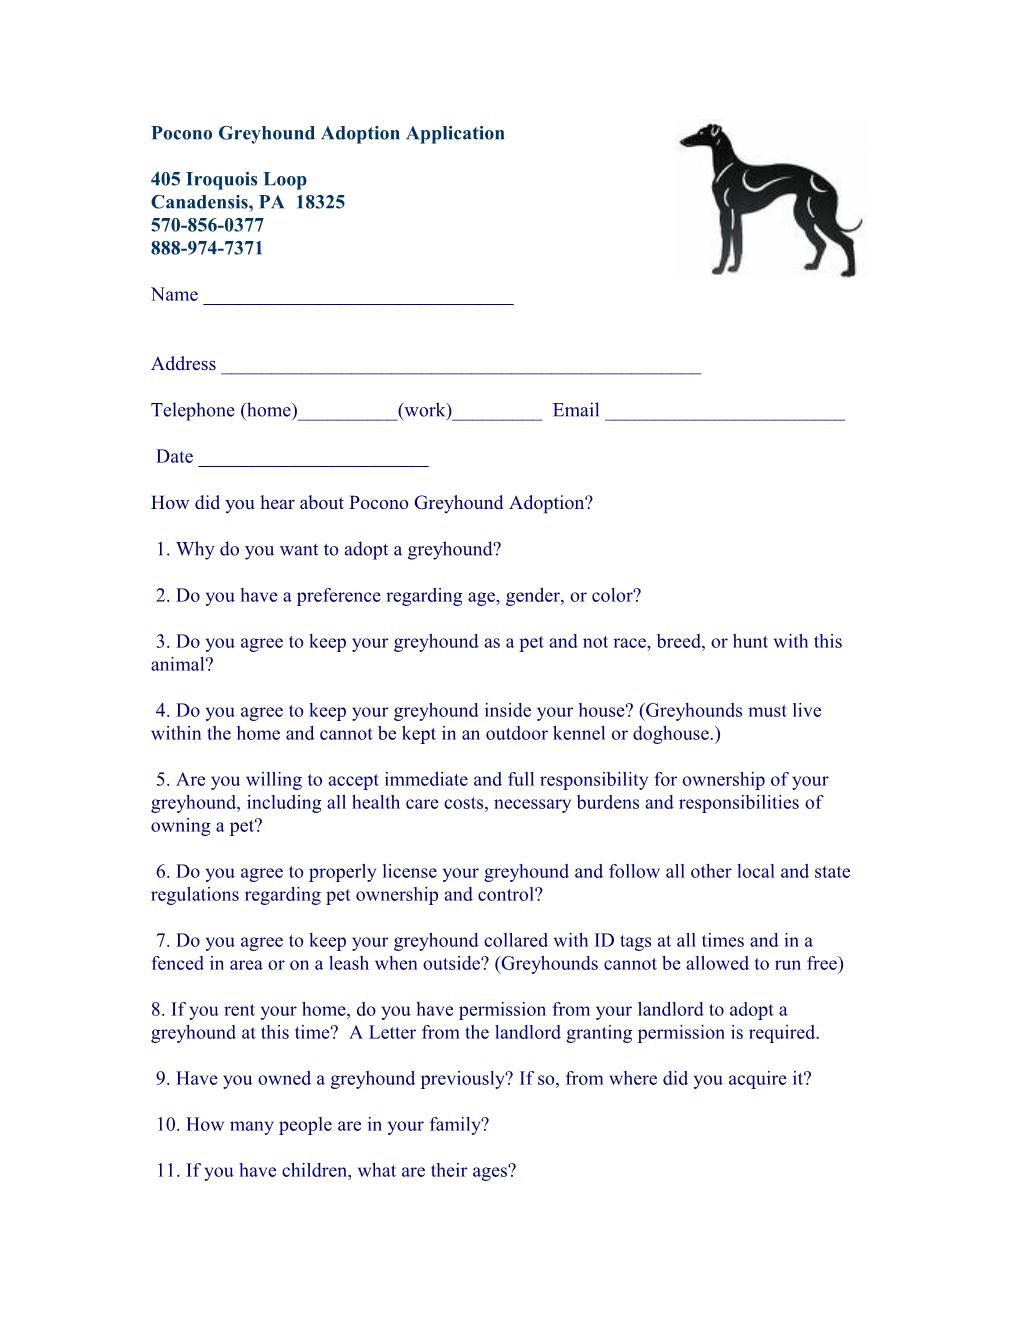 Pocono Greyhound Adoption Application